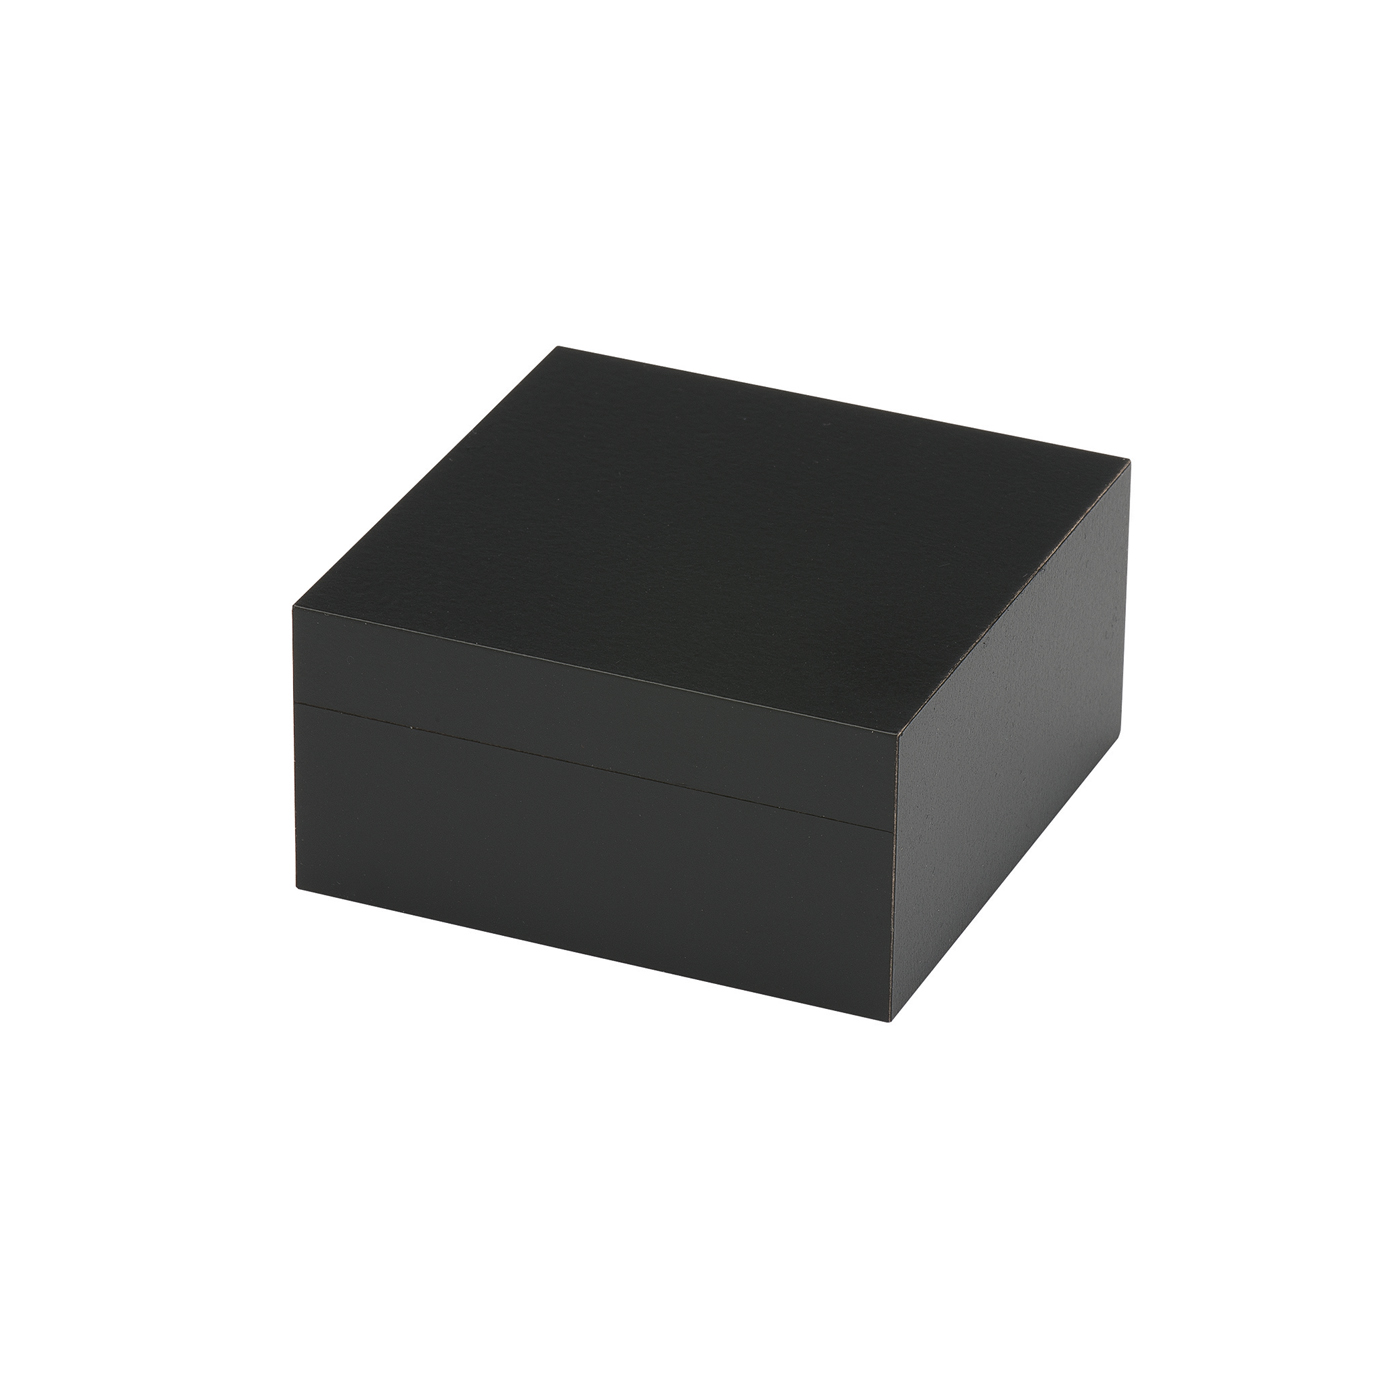 PICA-Design Schmucketui "Blackbox", 60 x 60 x 30 mm - 1 Stück